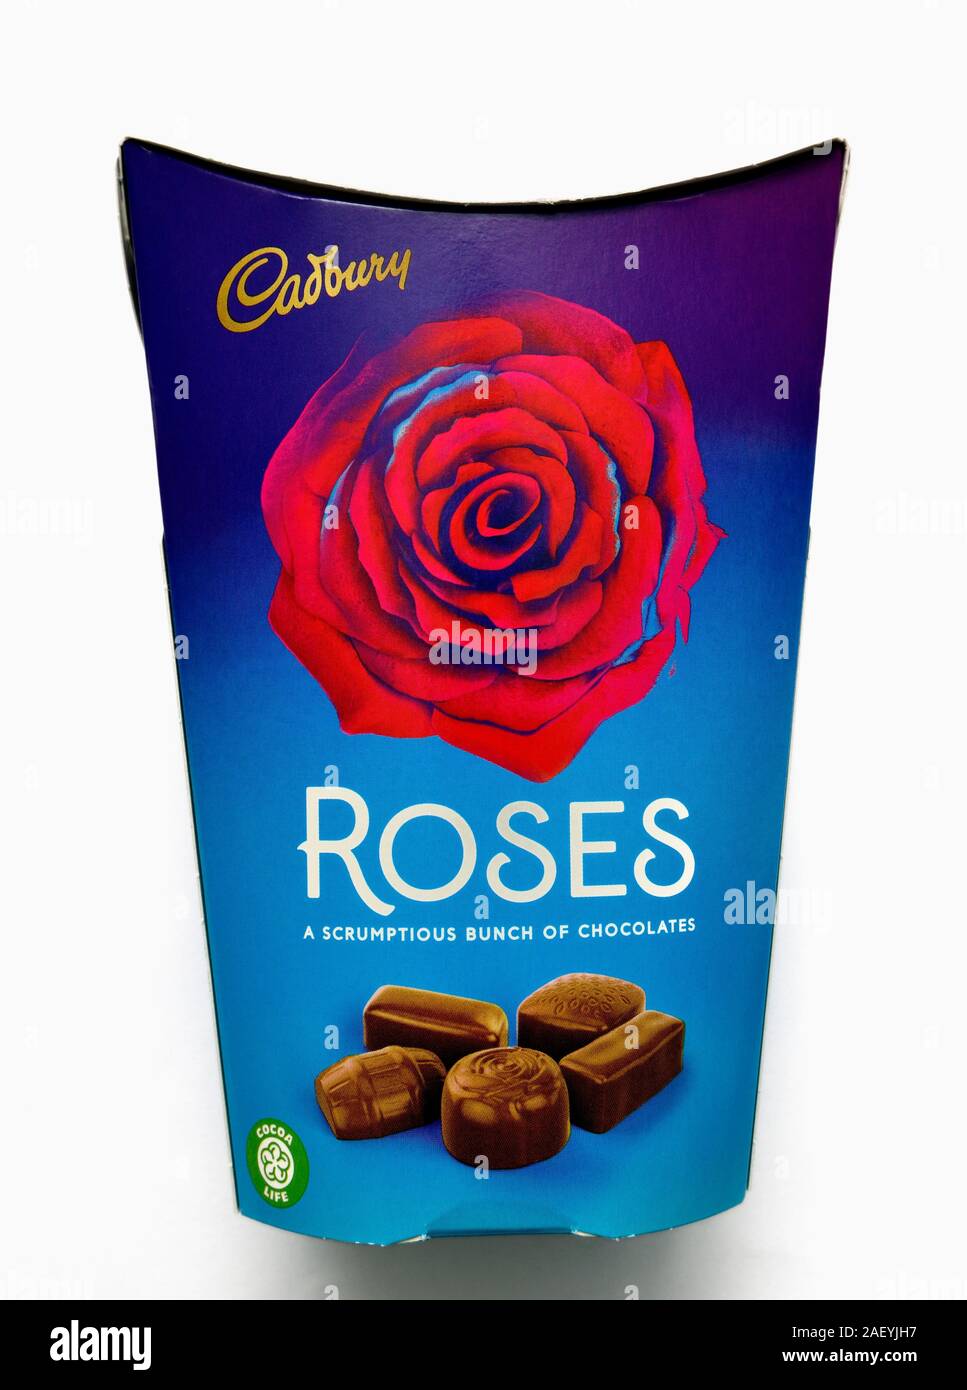 a-box-of-cadbury-roses-chocolates-on-a-white-background-2AEYJH7.jpg